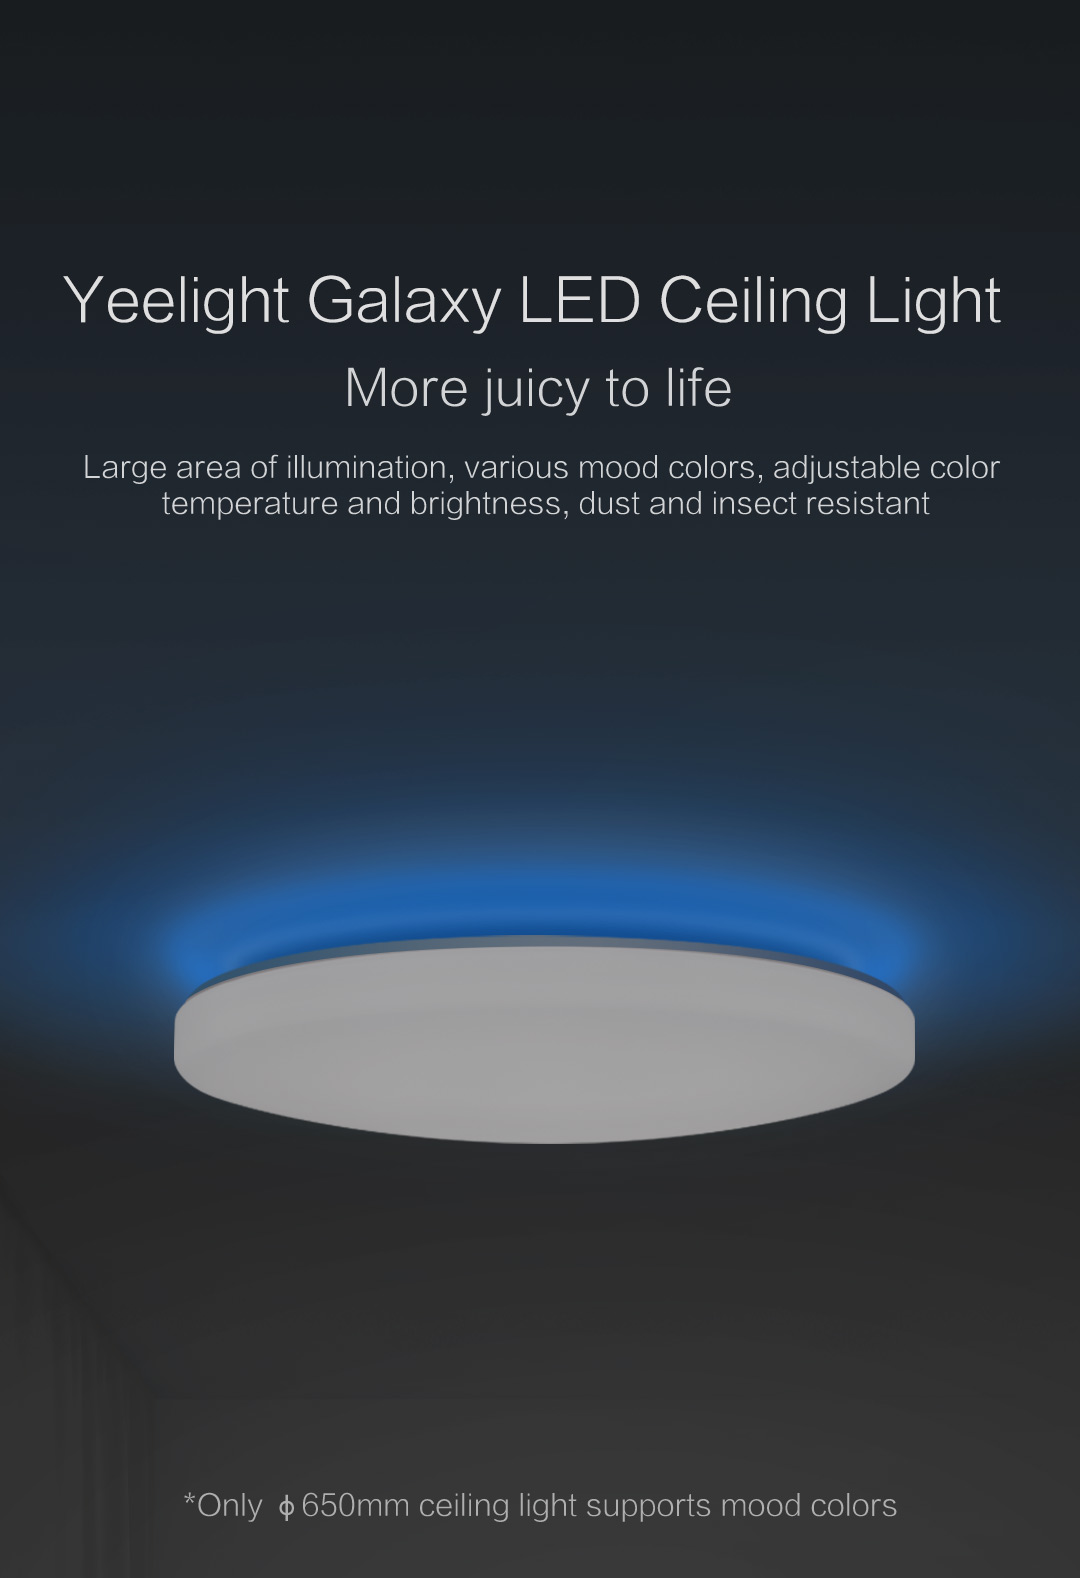 Galaxy LED Light-Yeelight Galaxy LED Ceiling Light-Yeelight